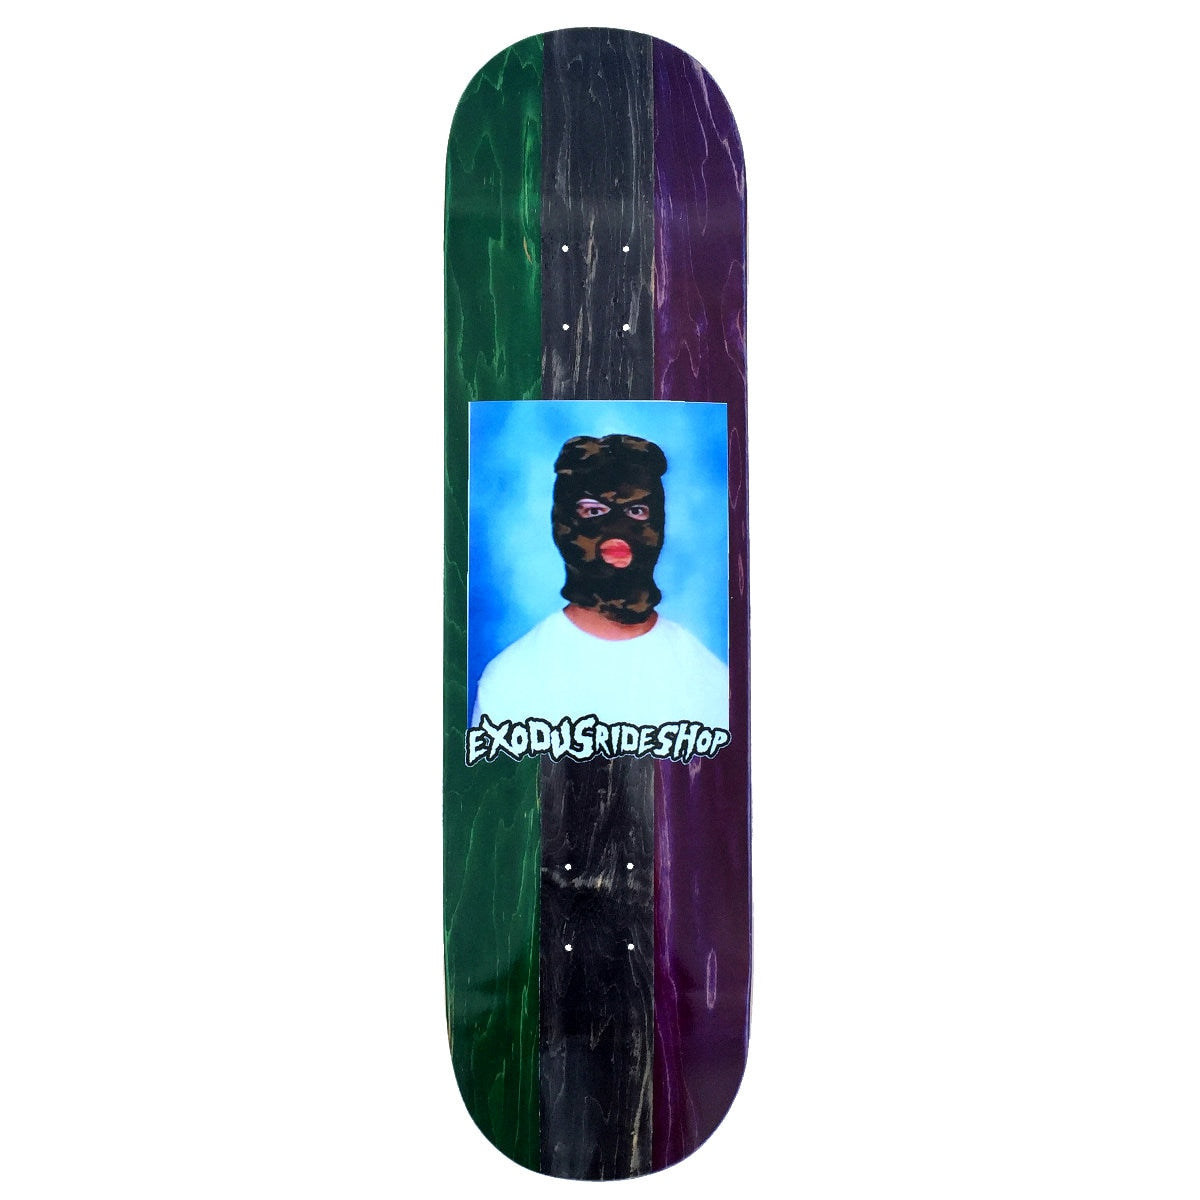 Exodus Ski Mask Full Skateboard Deck - Green/Black/Purple